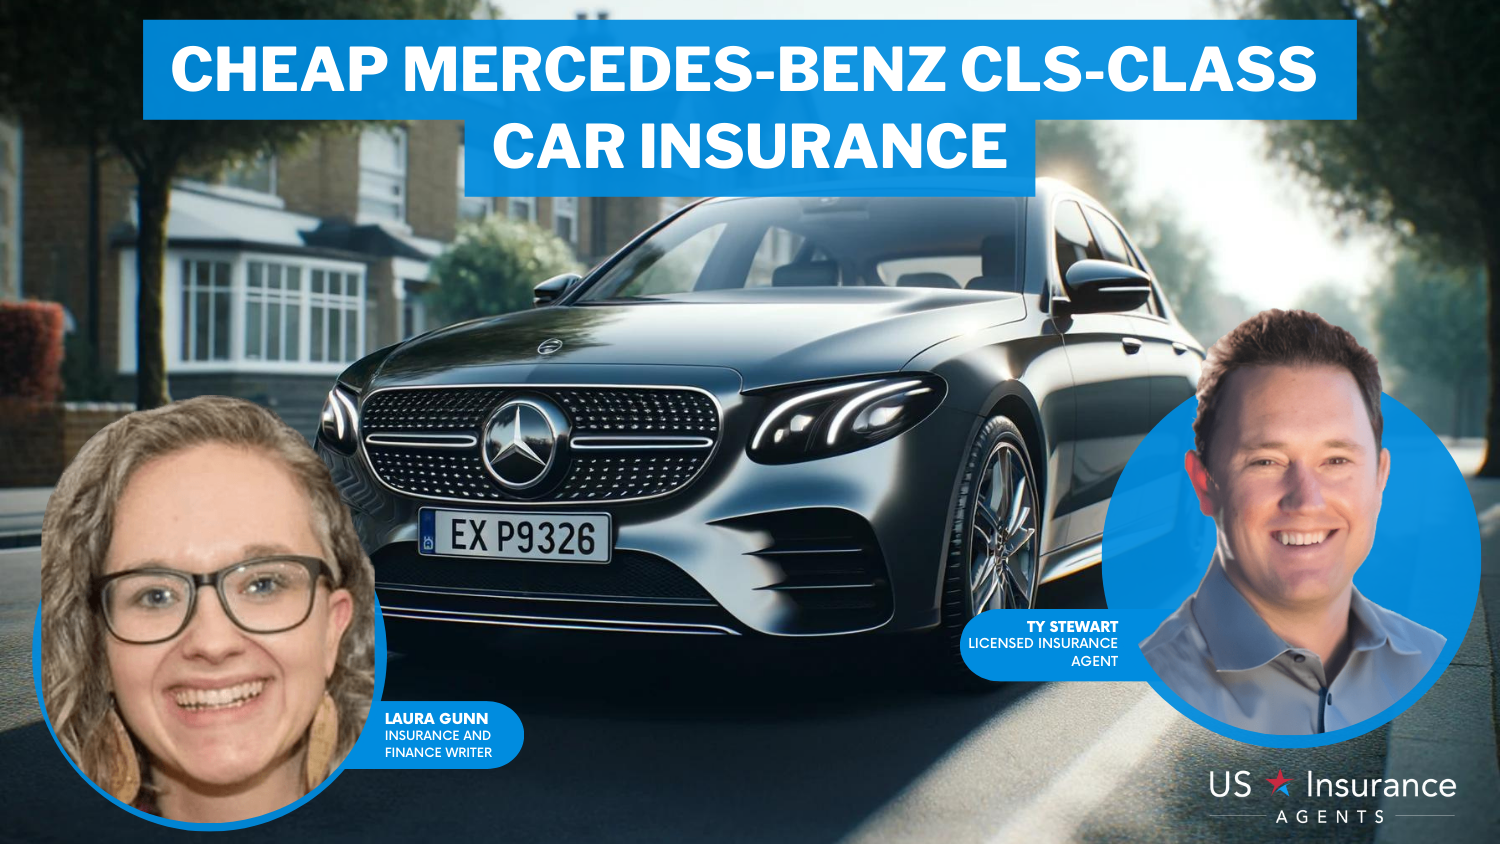 Cheap Mercedes-Benz CLS-Class Car Insurance: Erie, USAA, and Travelers